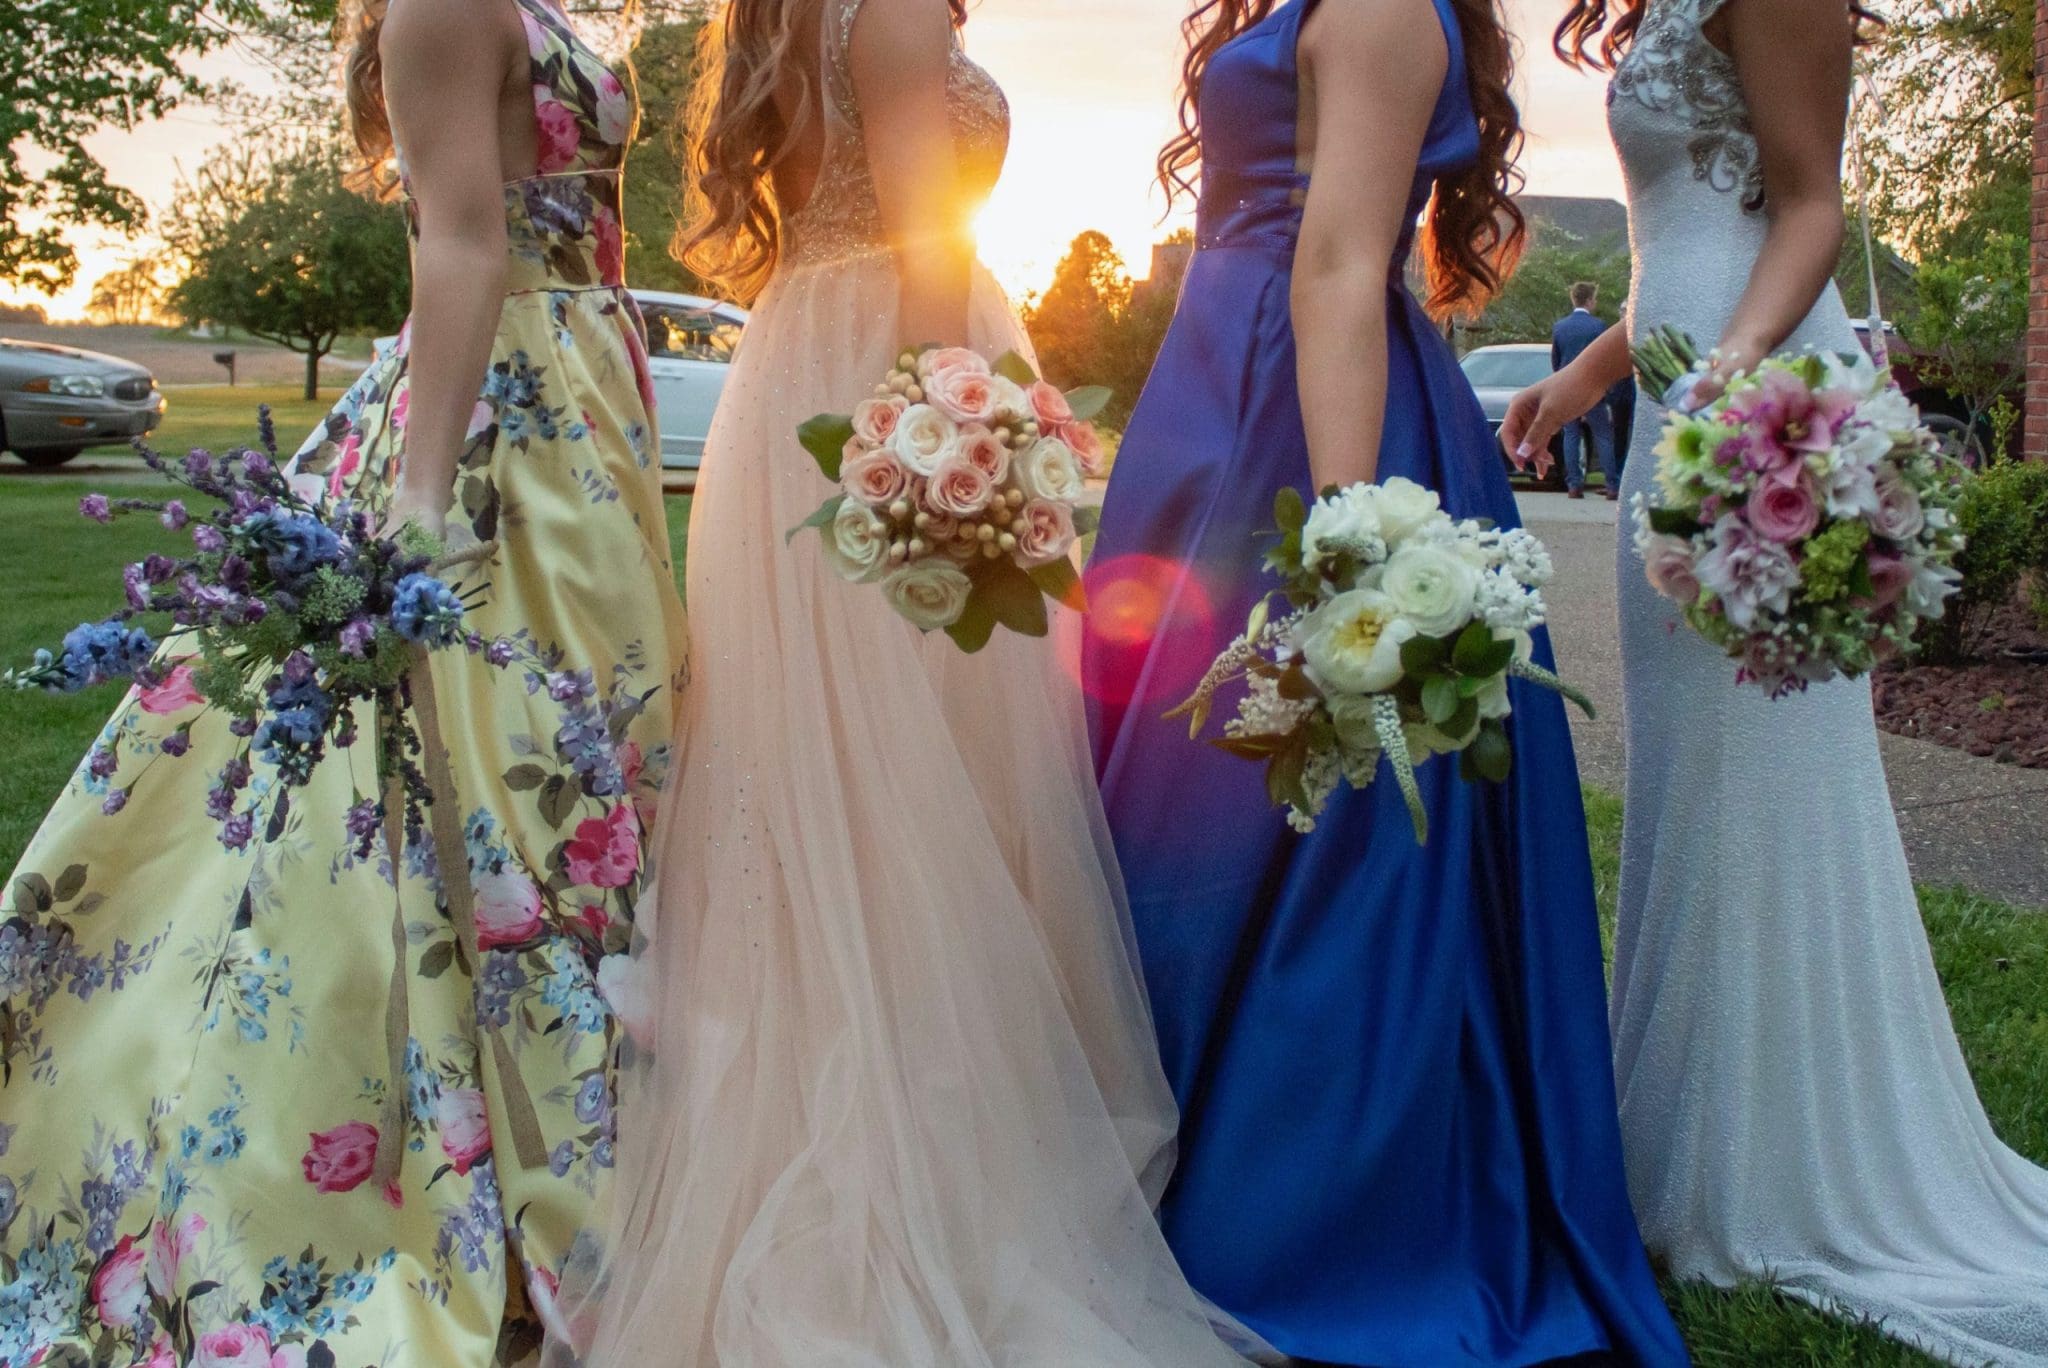 Bridesmaids dresses with flower bouquets